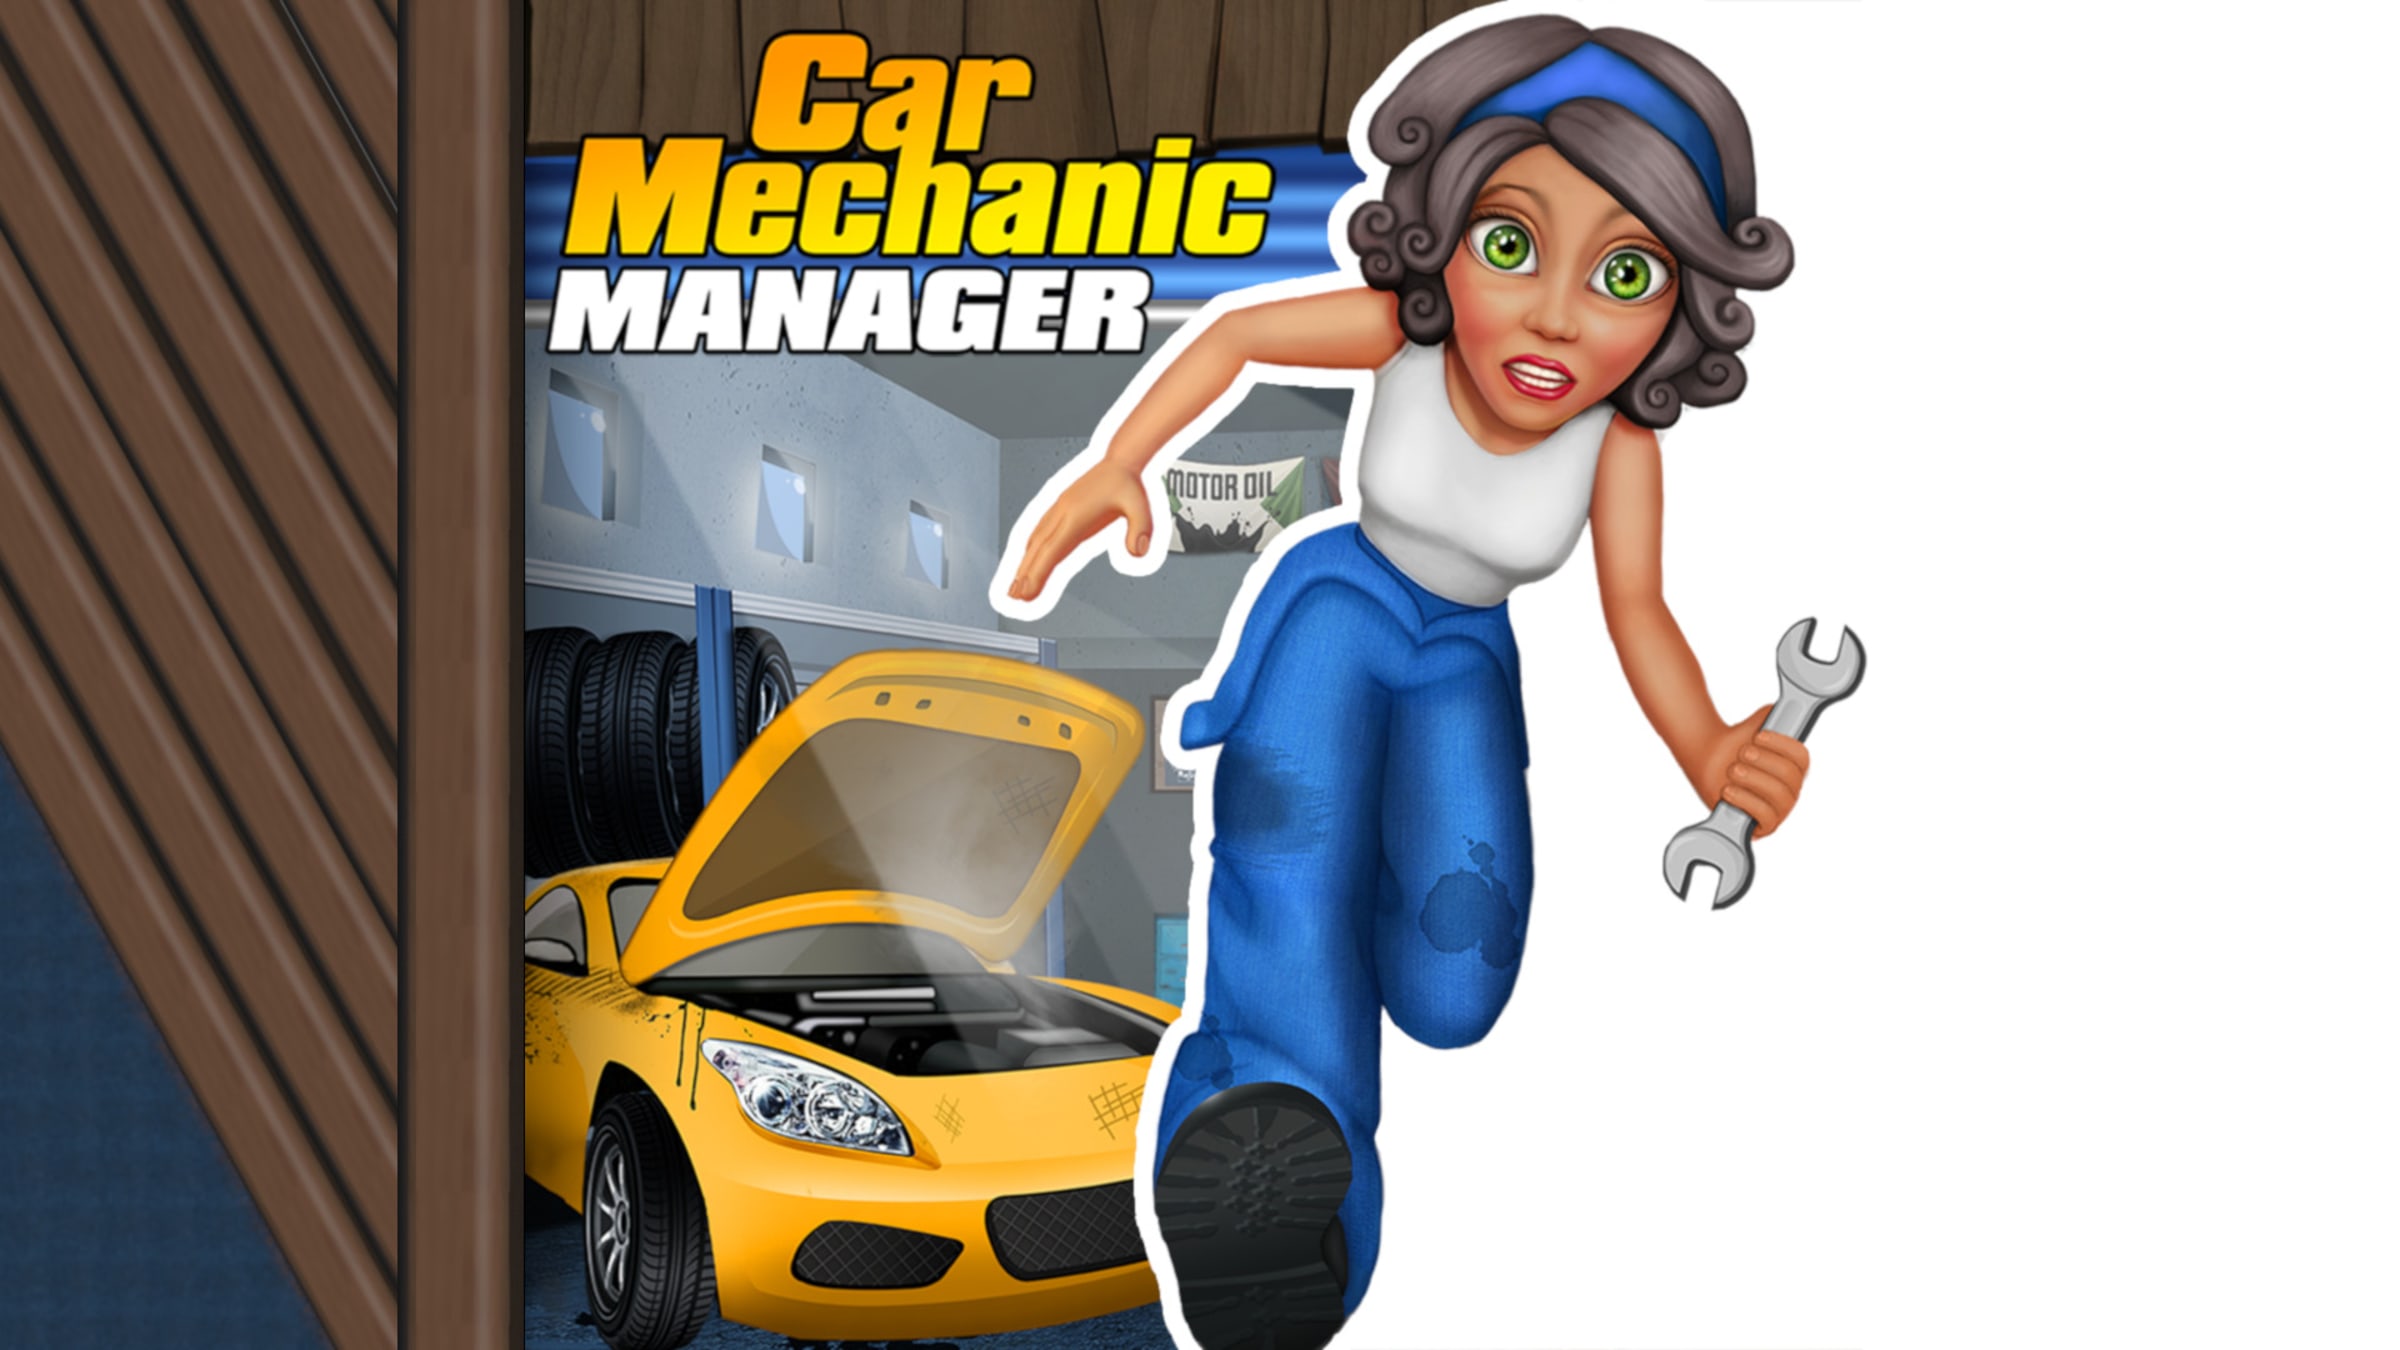 Car Mechanic Manager for Nintendo Switch - Nintendo Official Site